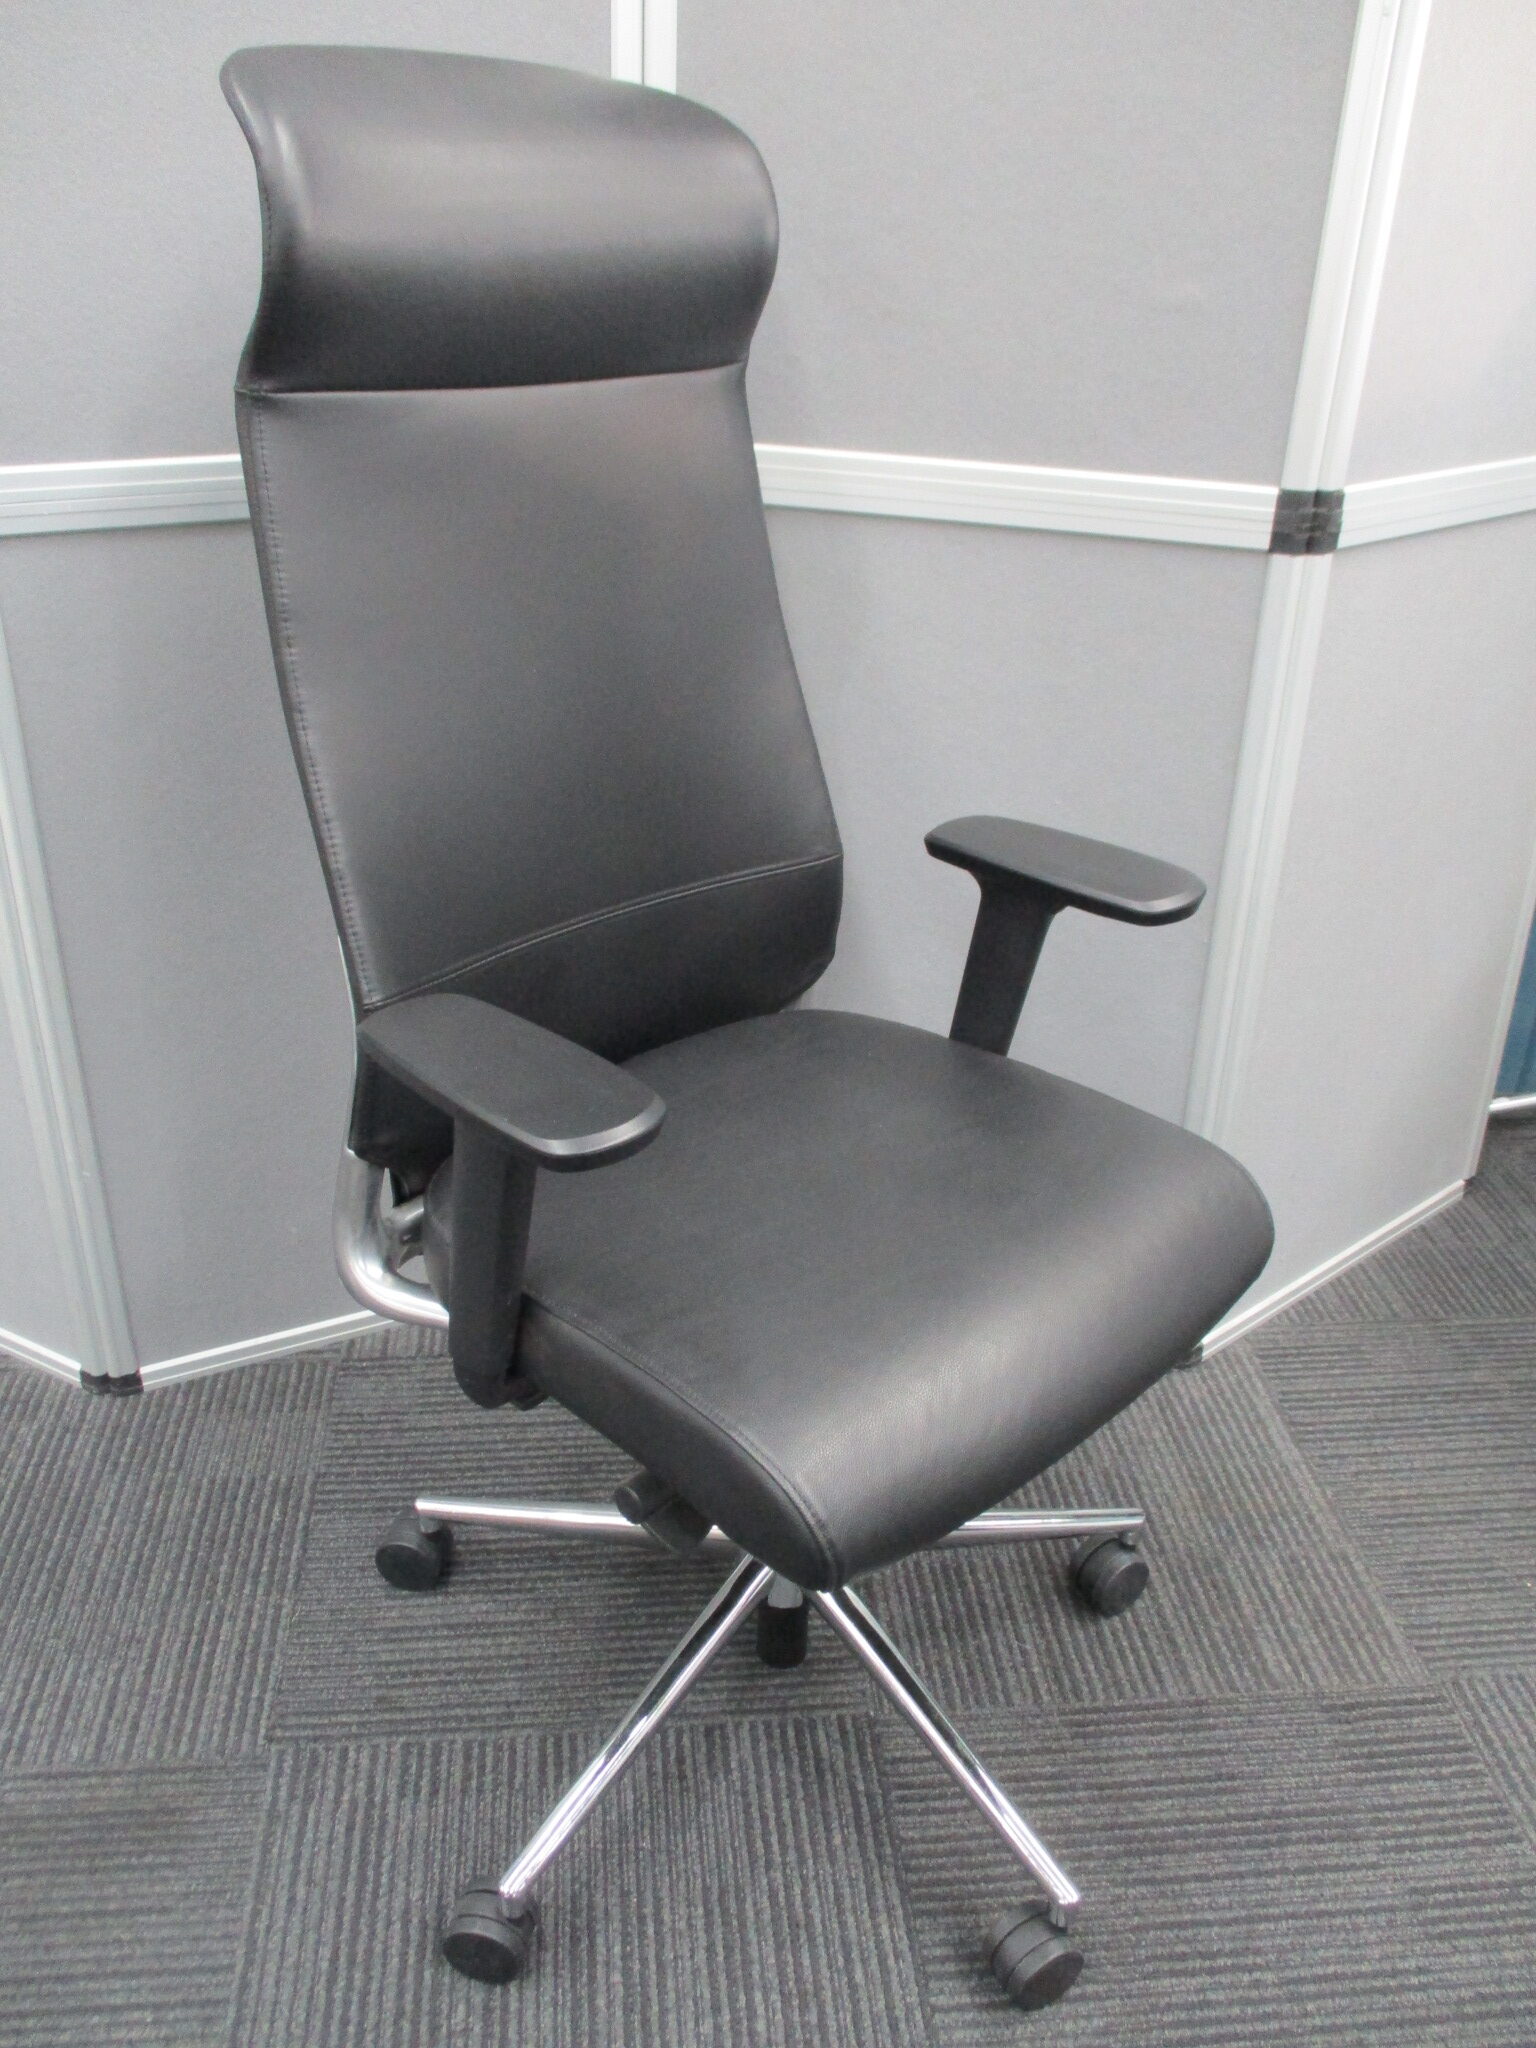 New Burton Leather Chairs $895